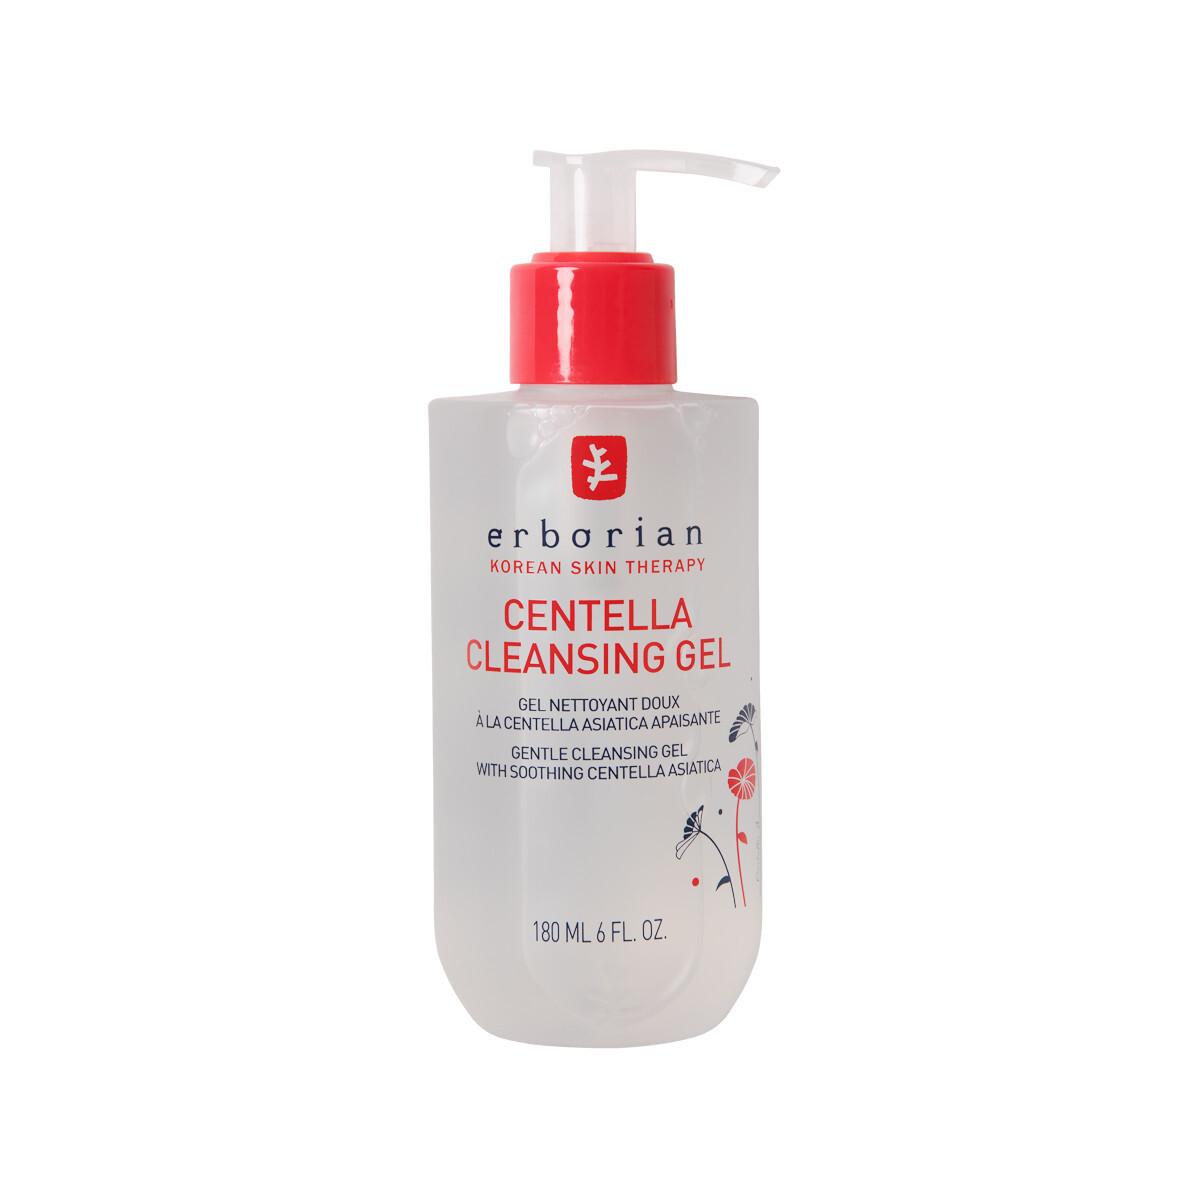 Centella cleansing gel - Cleansing gel, Transparent, large image number 0